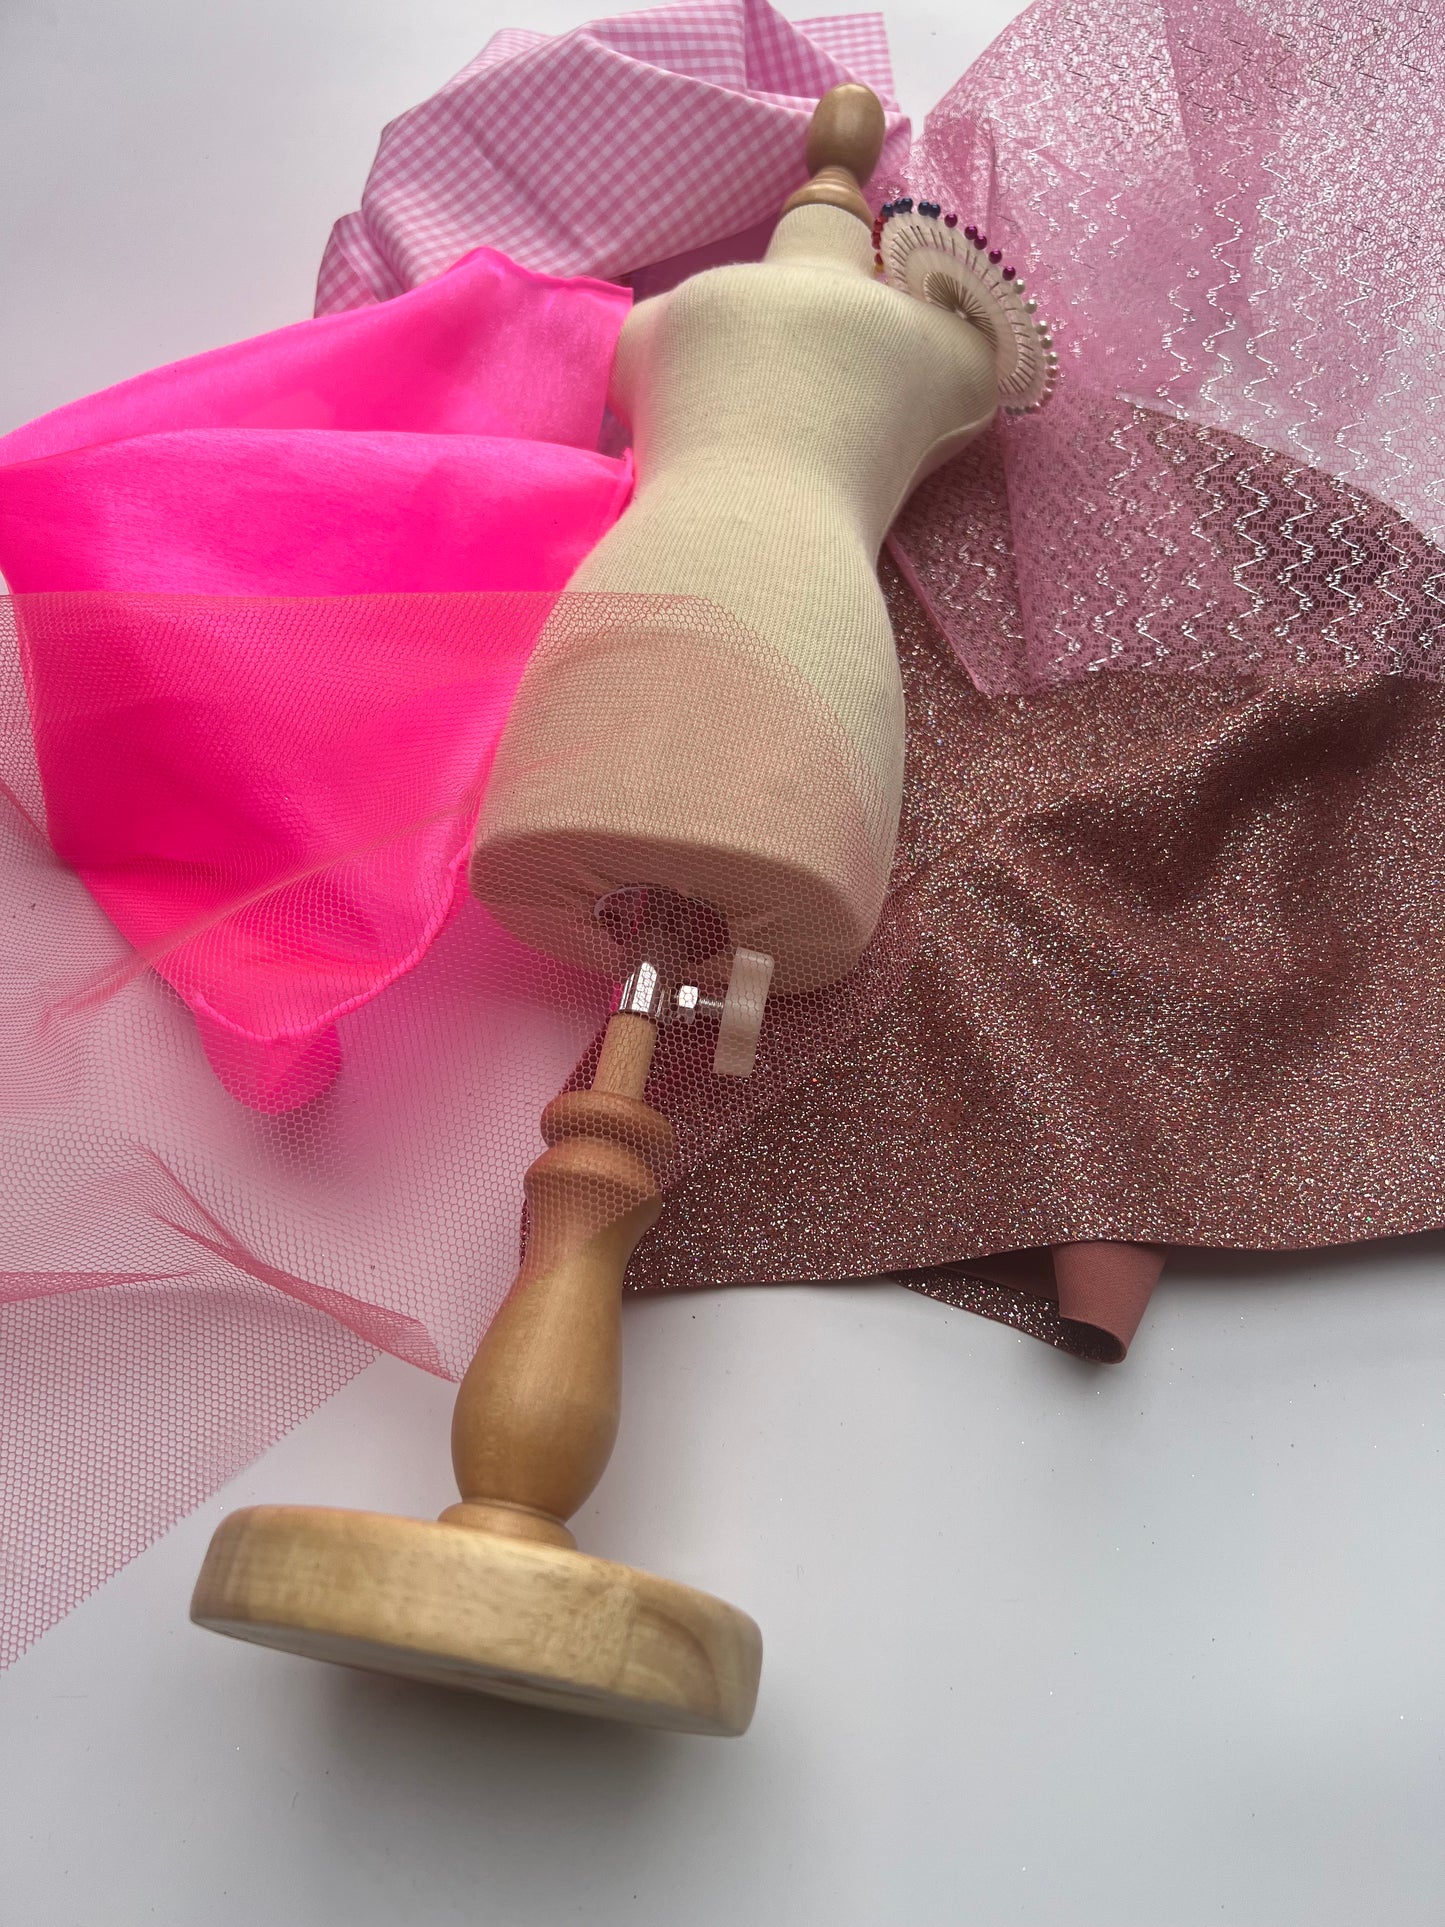 Barbie inspired fabric